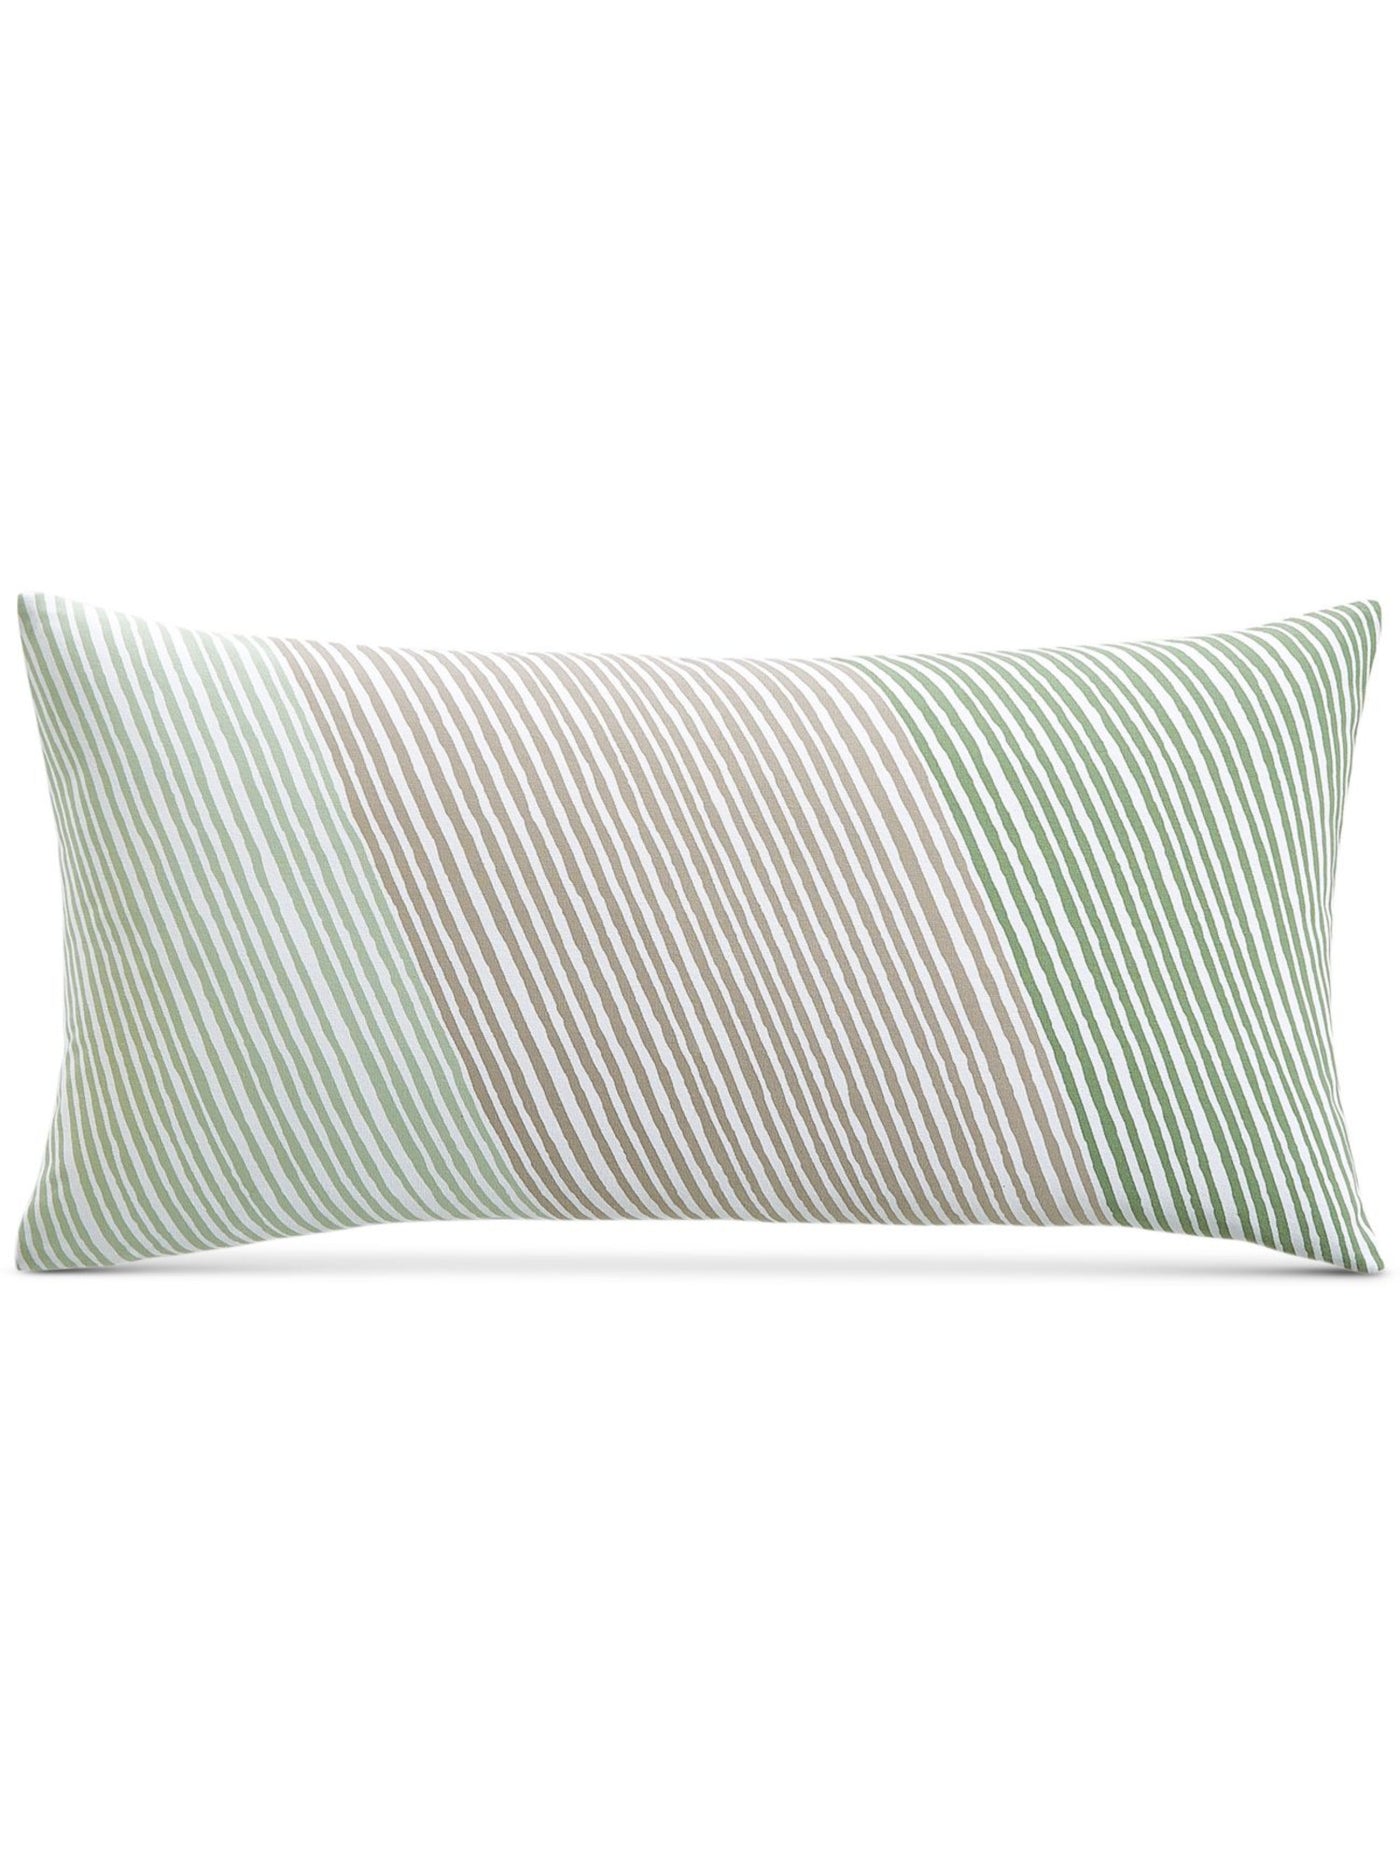 CHARTER CLUB Damask Designs White Striped 12 X 24 Decorative Pillow